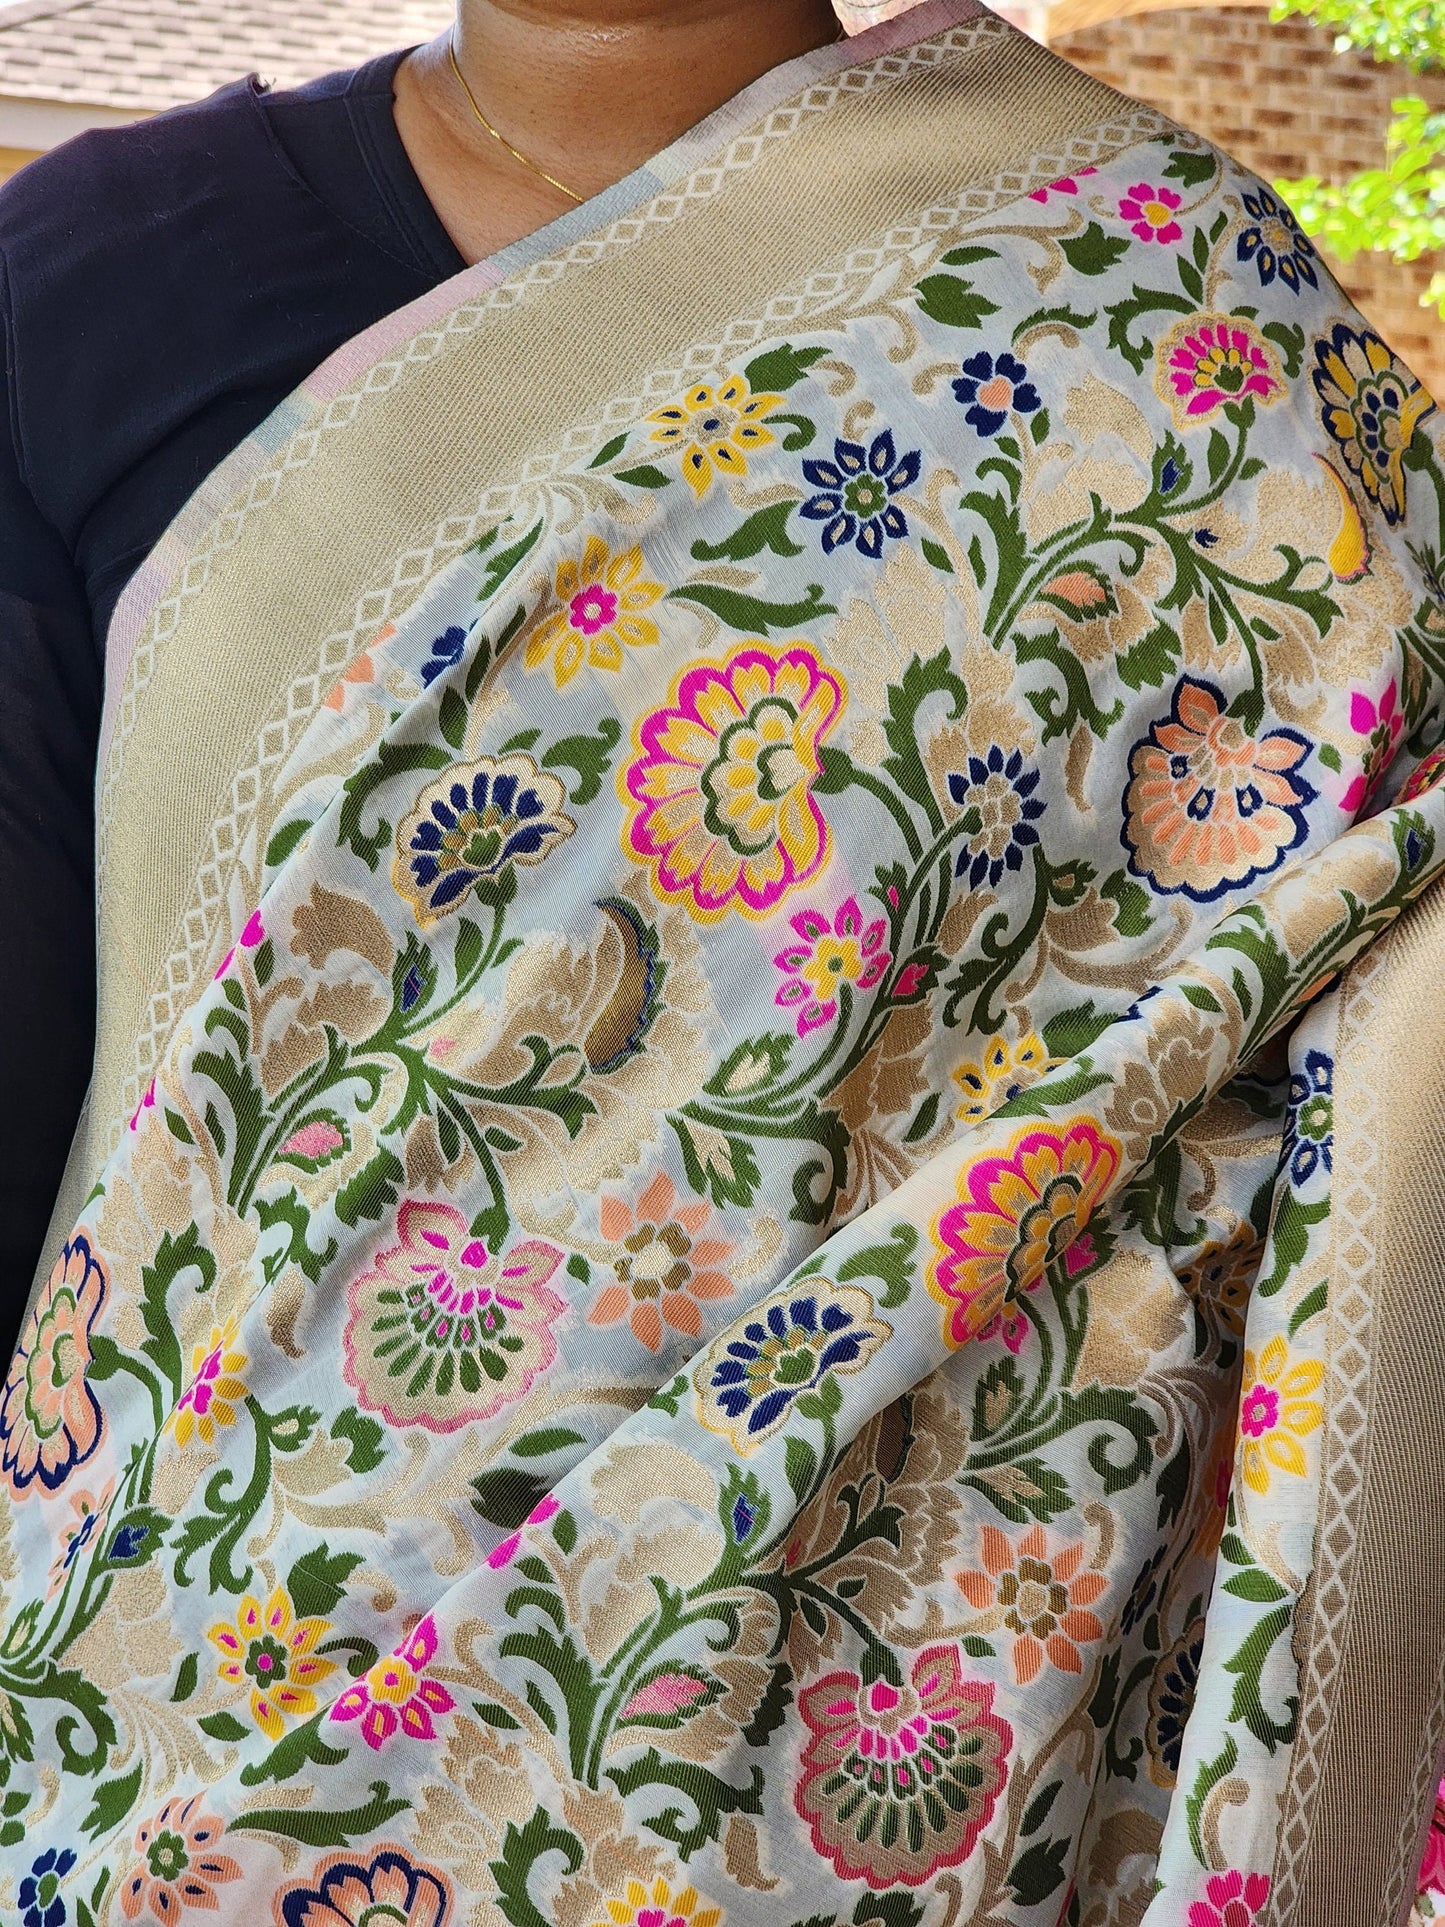 Banarasi Silk Off-White Dupatta, multicolor and gold floral handweaving, Indian traditional & Festive wear, Luxurious Soft Banarsi Dhupatta